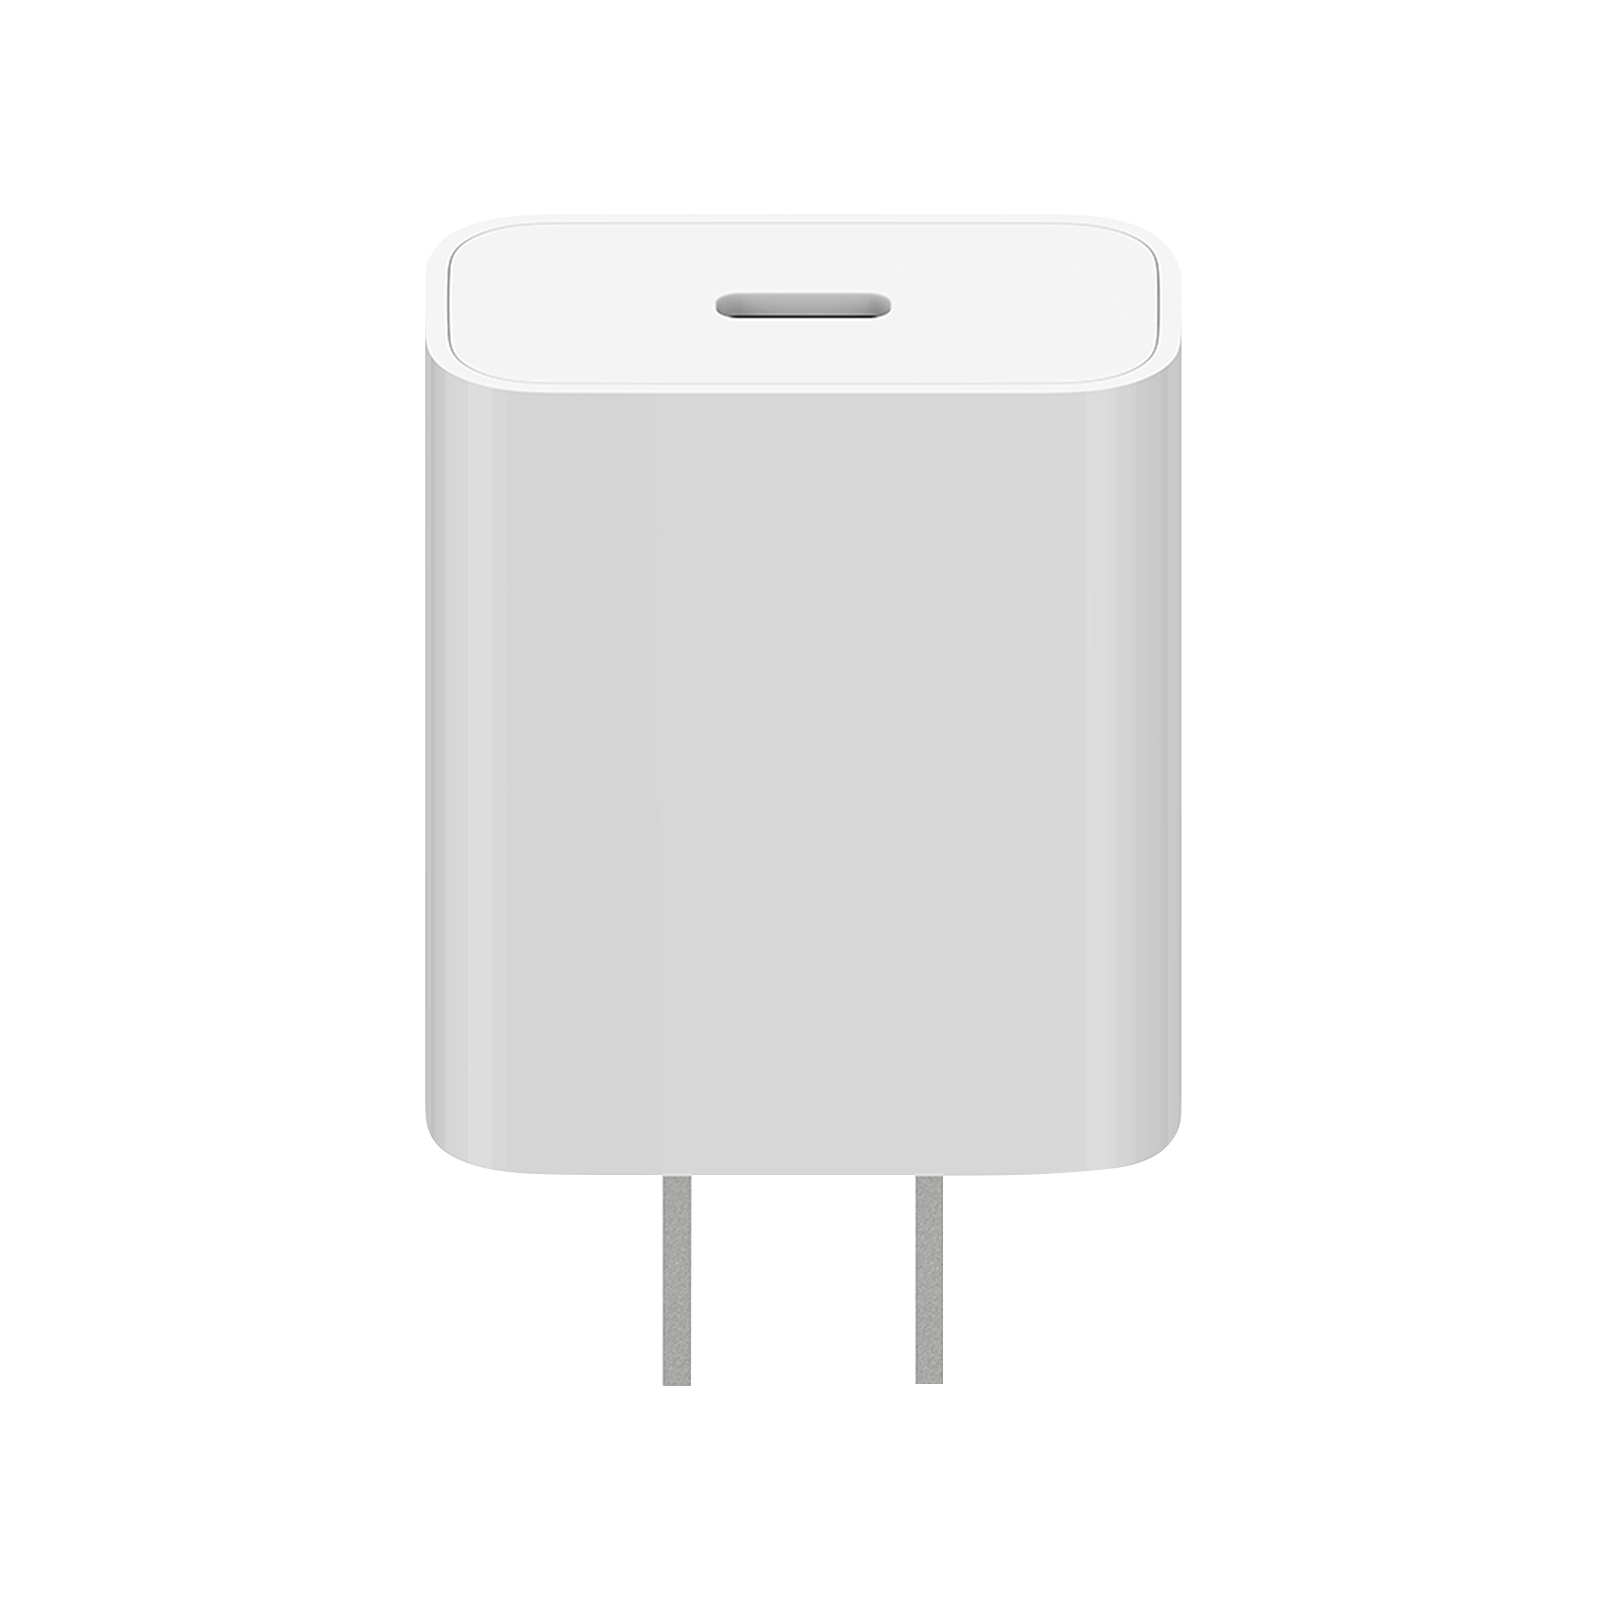 Mi 20W charger (Type-C)